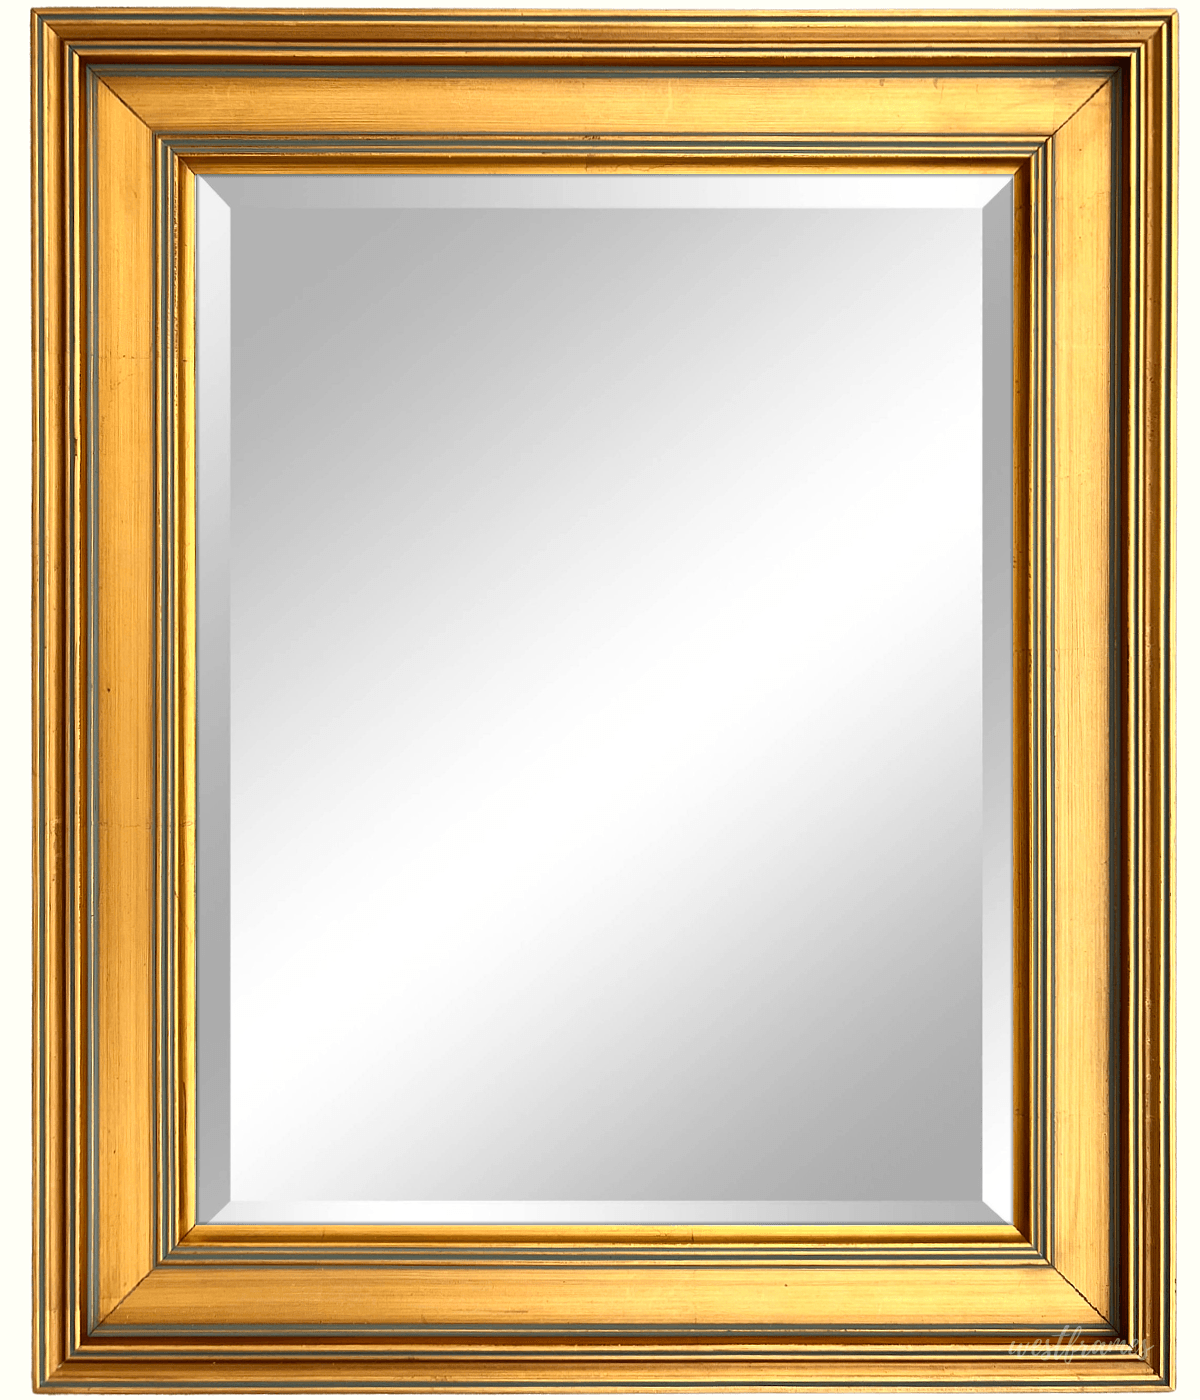 Gallery Classic Antique Gold Leaf Wood Framed Wall Mirror 2" - West Frames